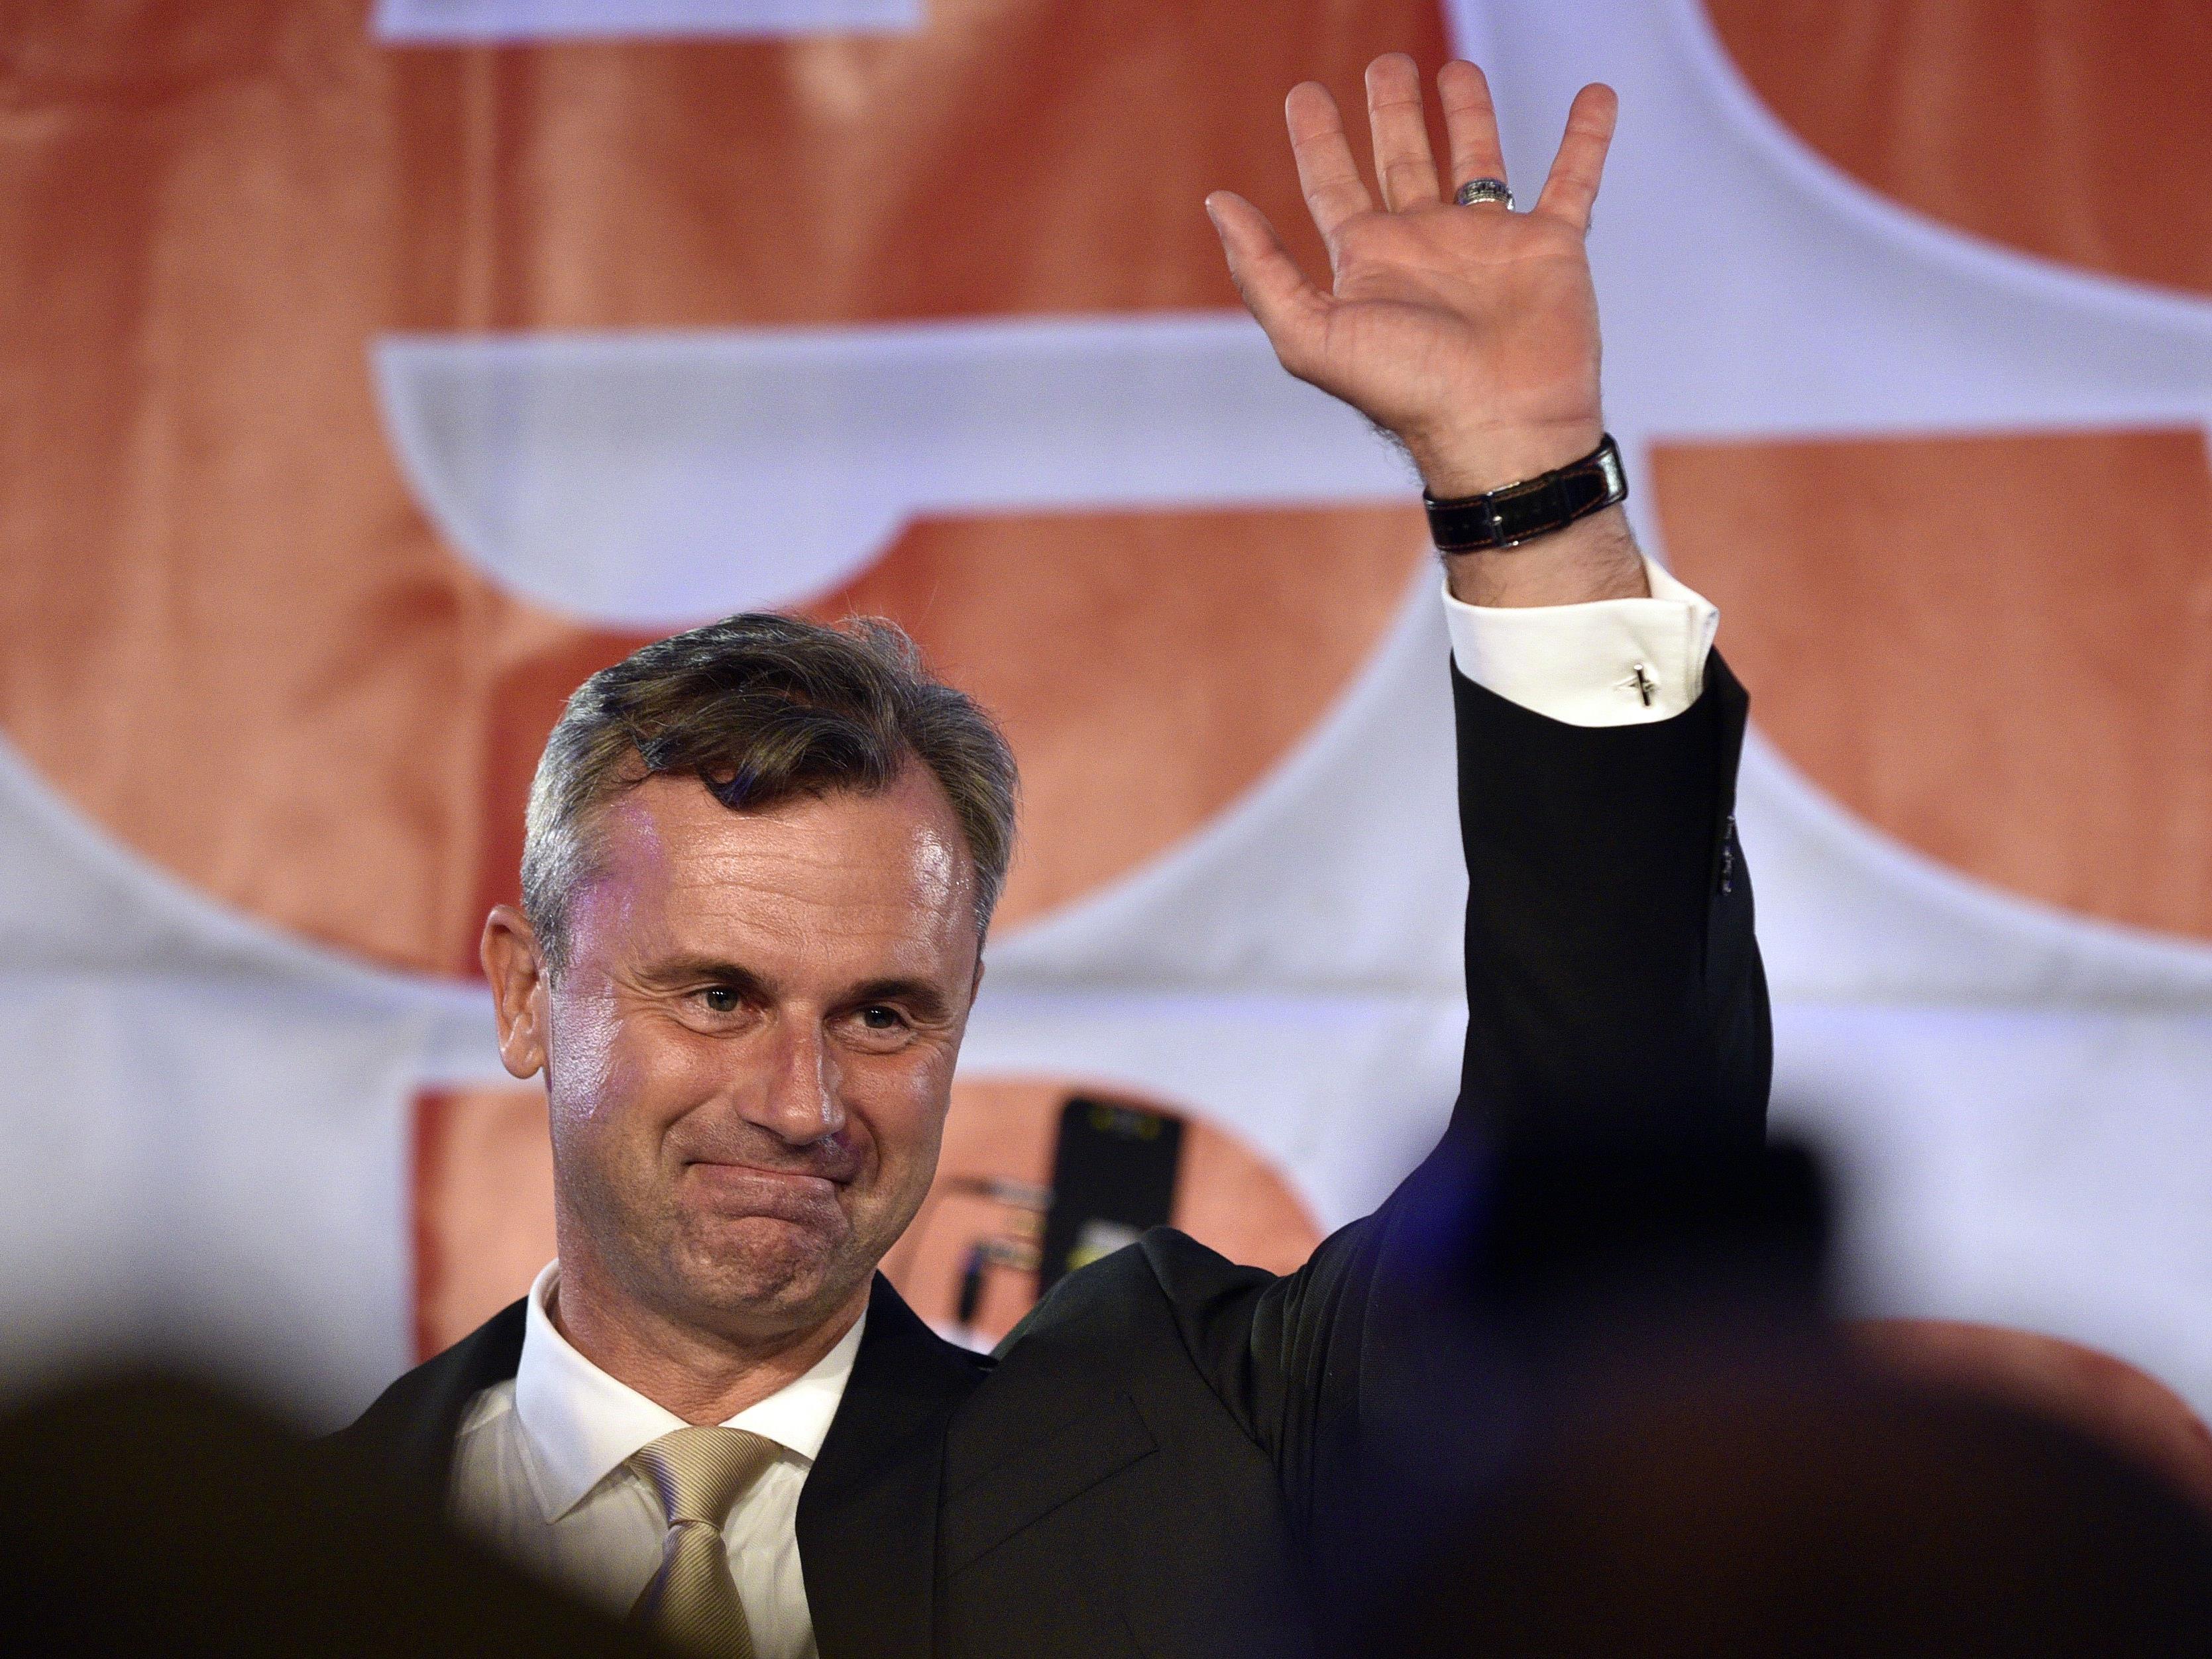 FPÖ-Kandidat Hofer: "Dieses Mal wird alles passen"